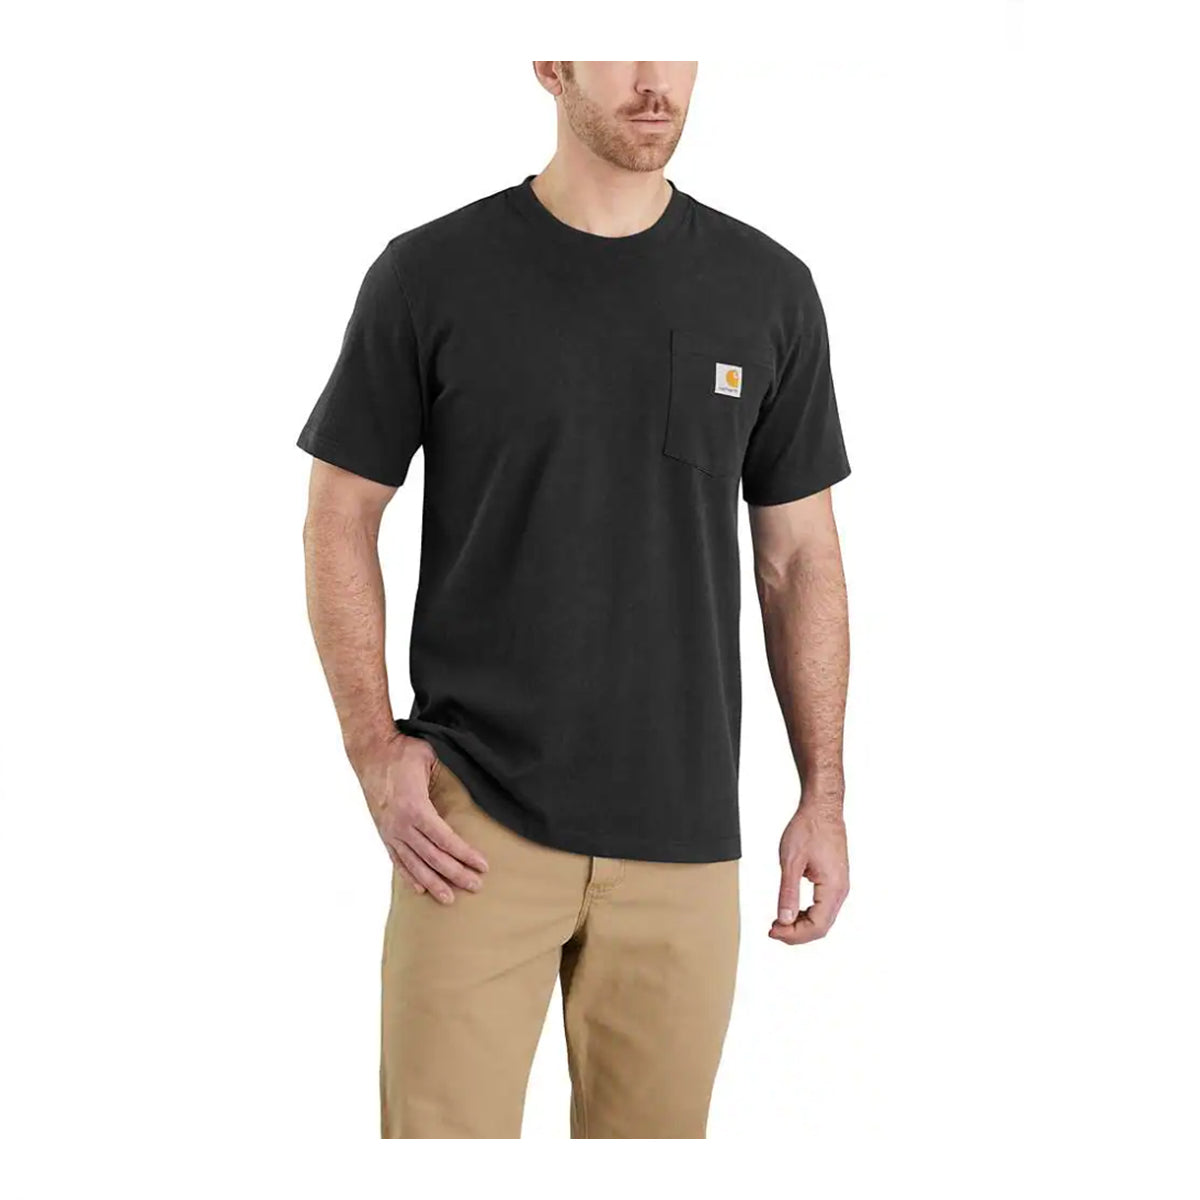 Carhartt - T-Shirt Pocket K87 Black - 103296 - BLACK